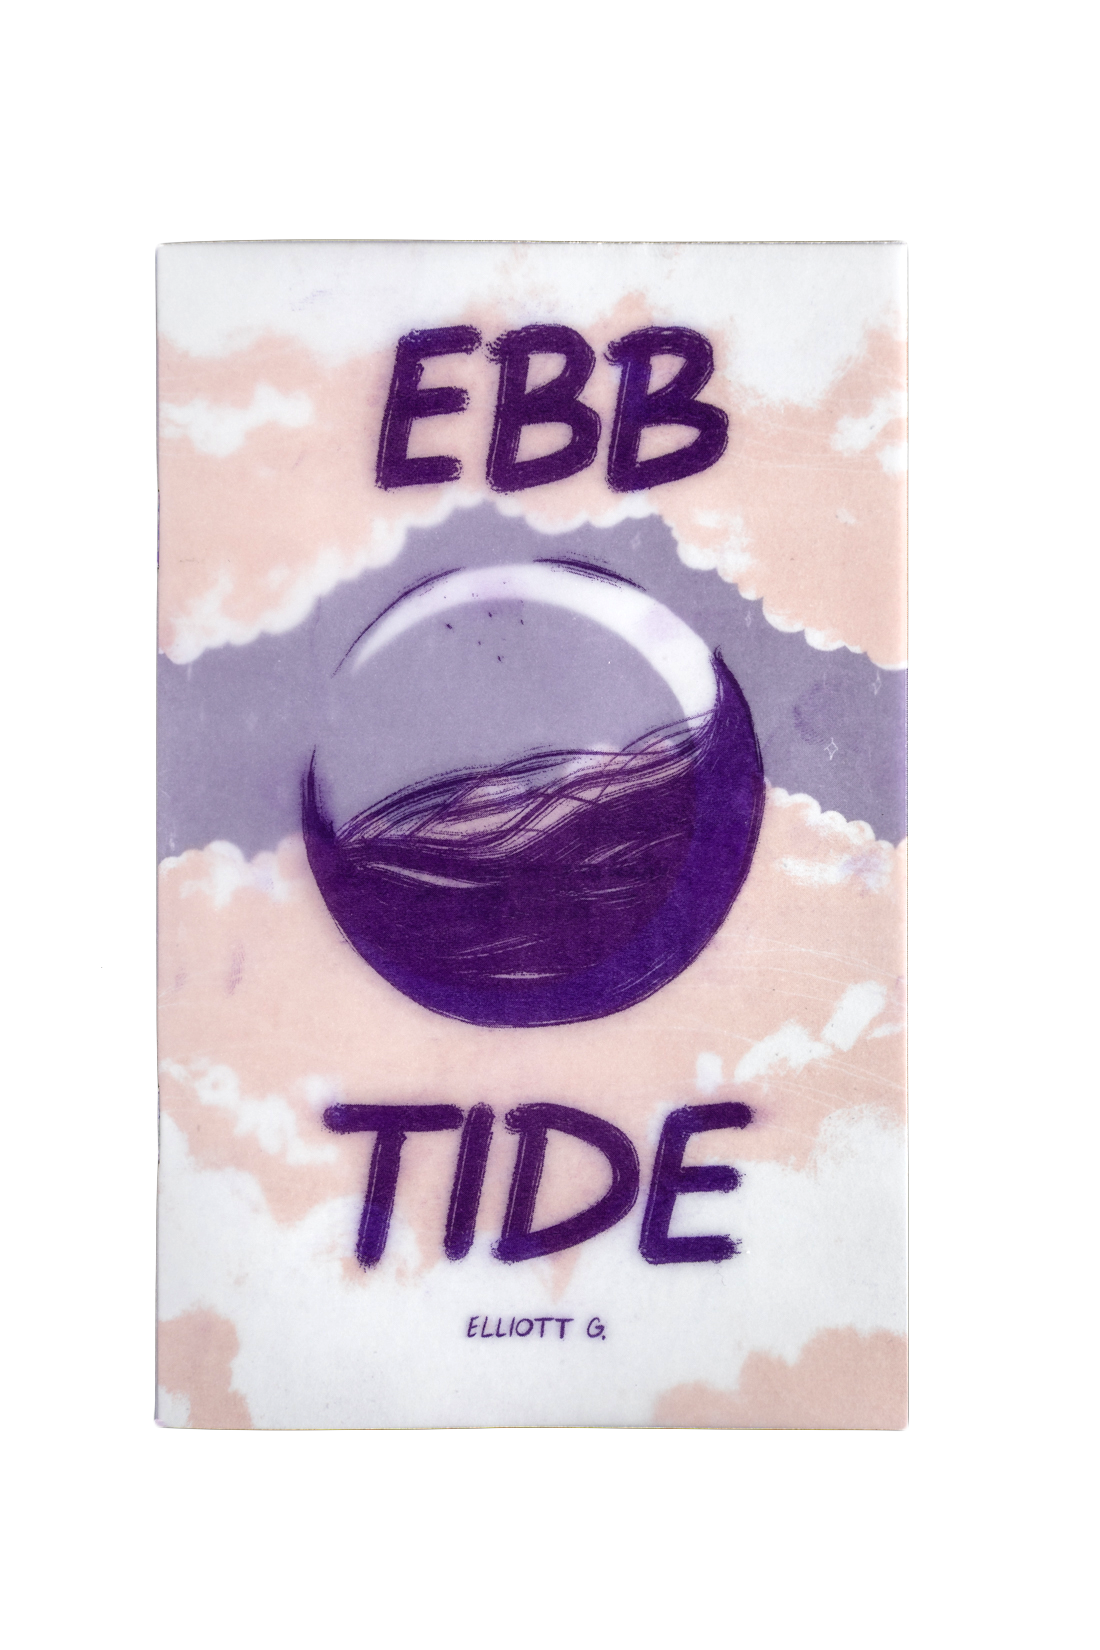 Ebb Tide by Elliott G